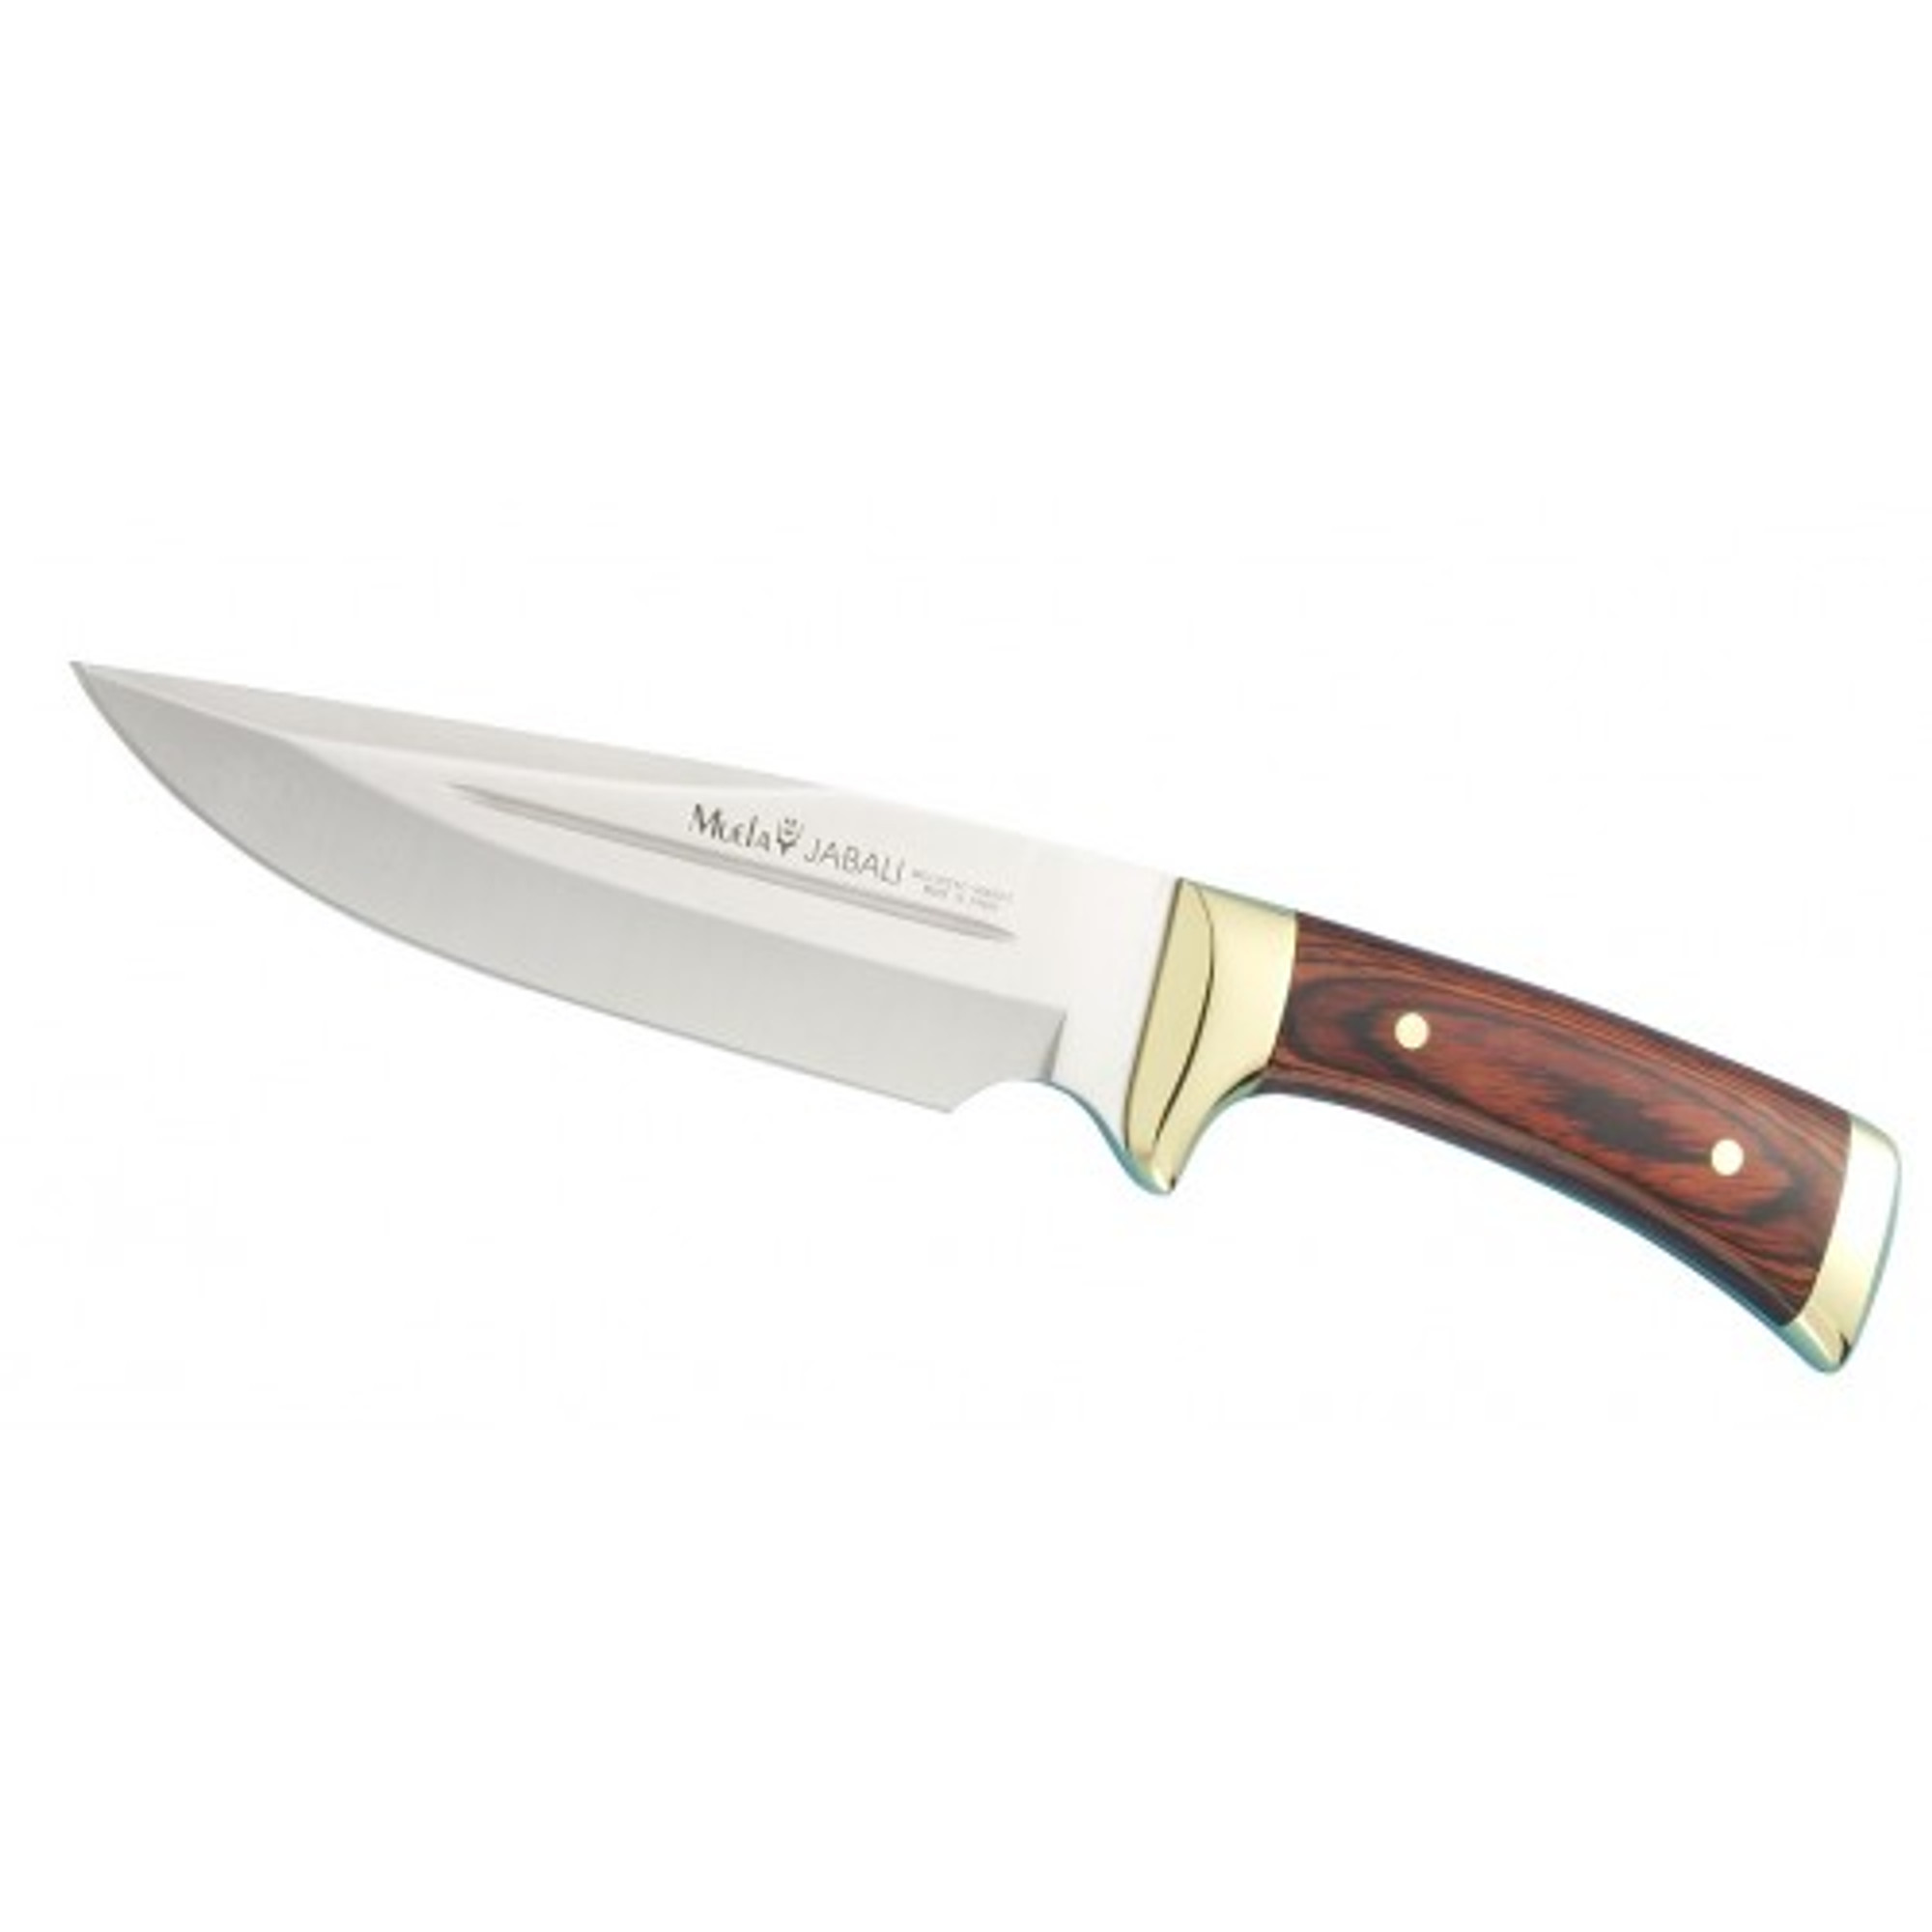 MUELA JABALI-17R, X50CrMoV15, 6-1/8" Fixed Blade Hunting Knife, Coral Pakkawood Handle